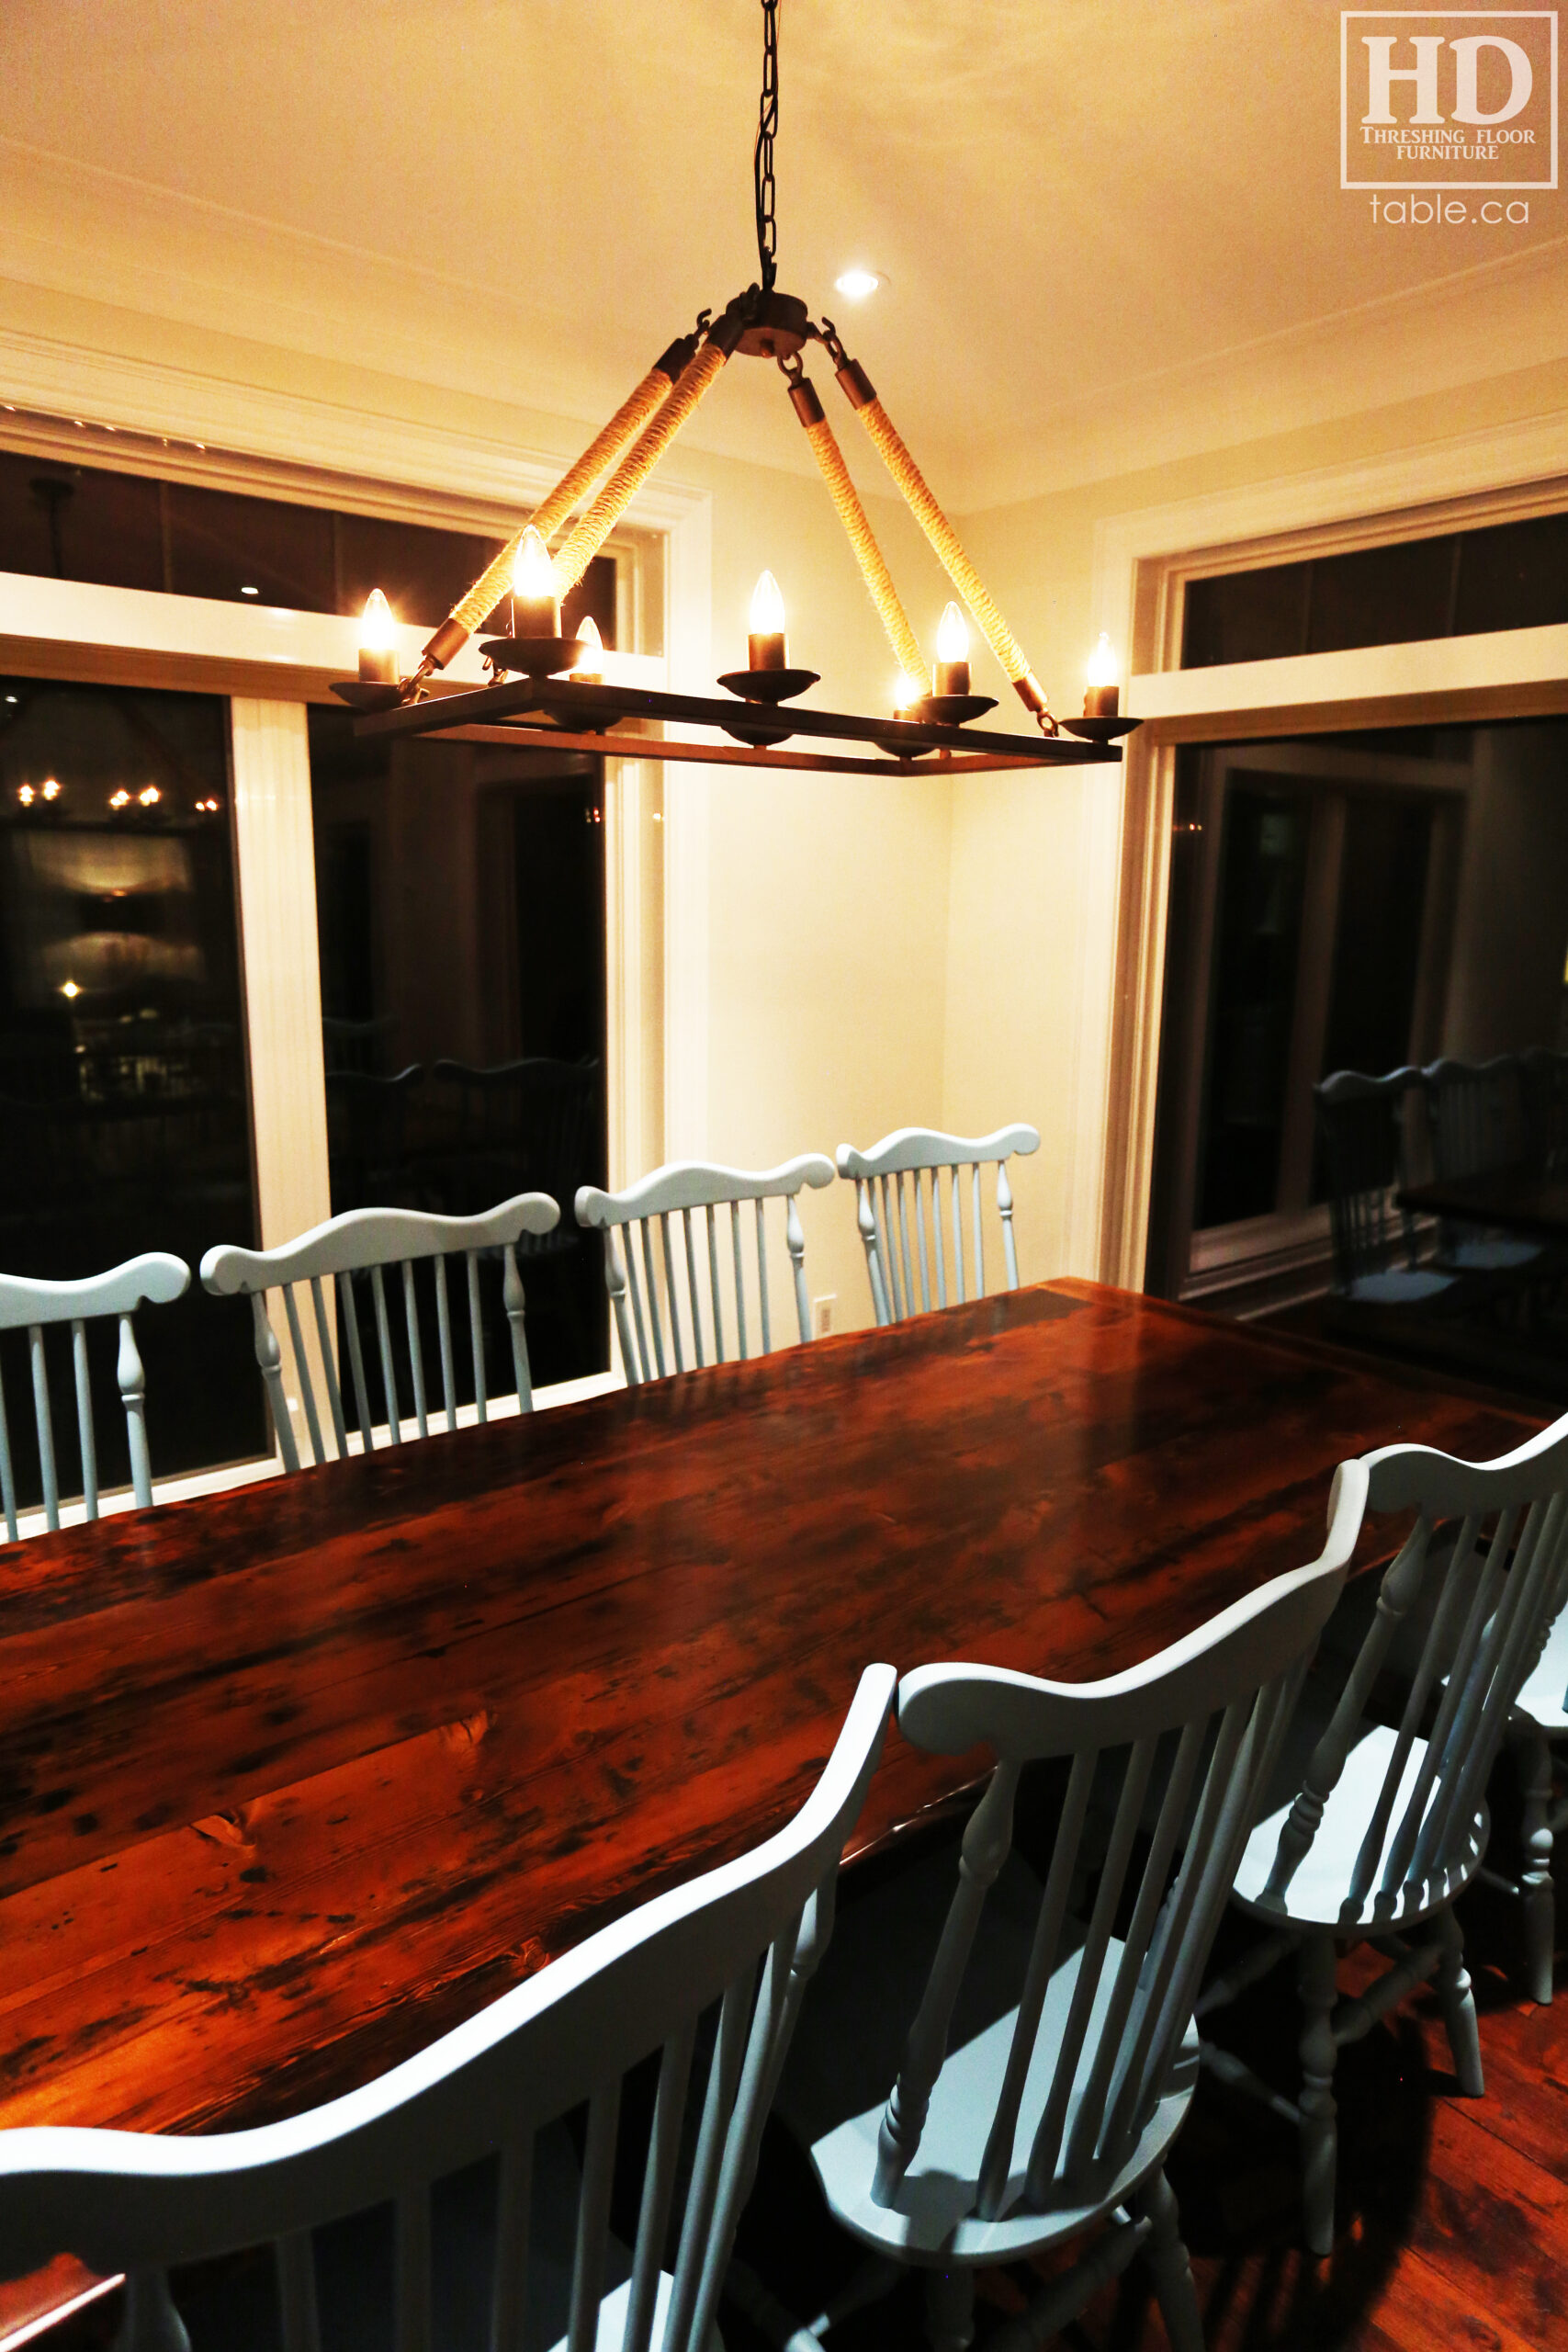 Barnboard Table by HD Threshing Floor Furniture / www.table.ca